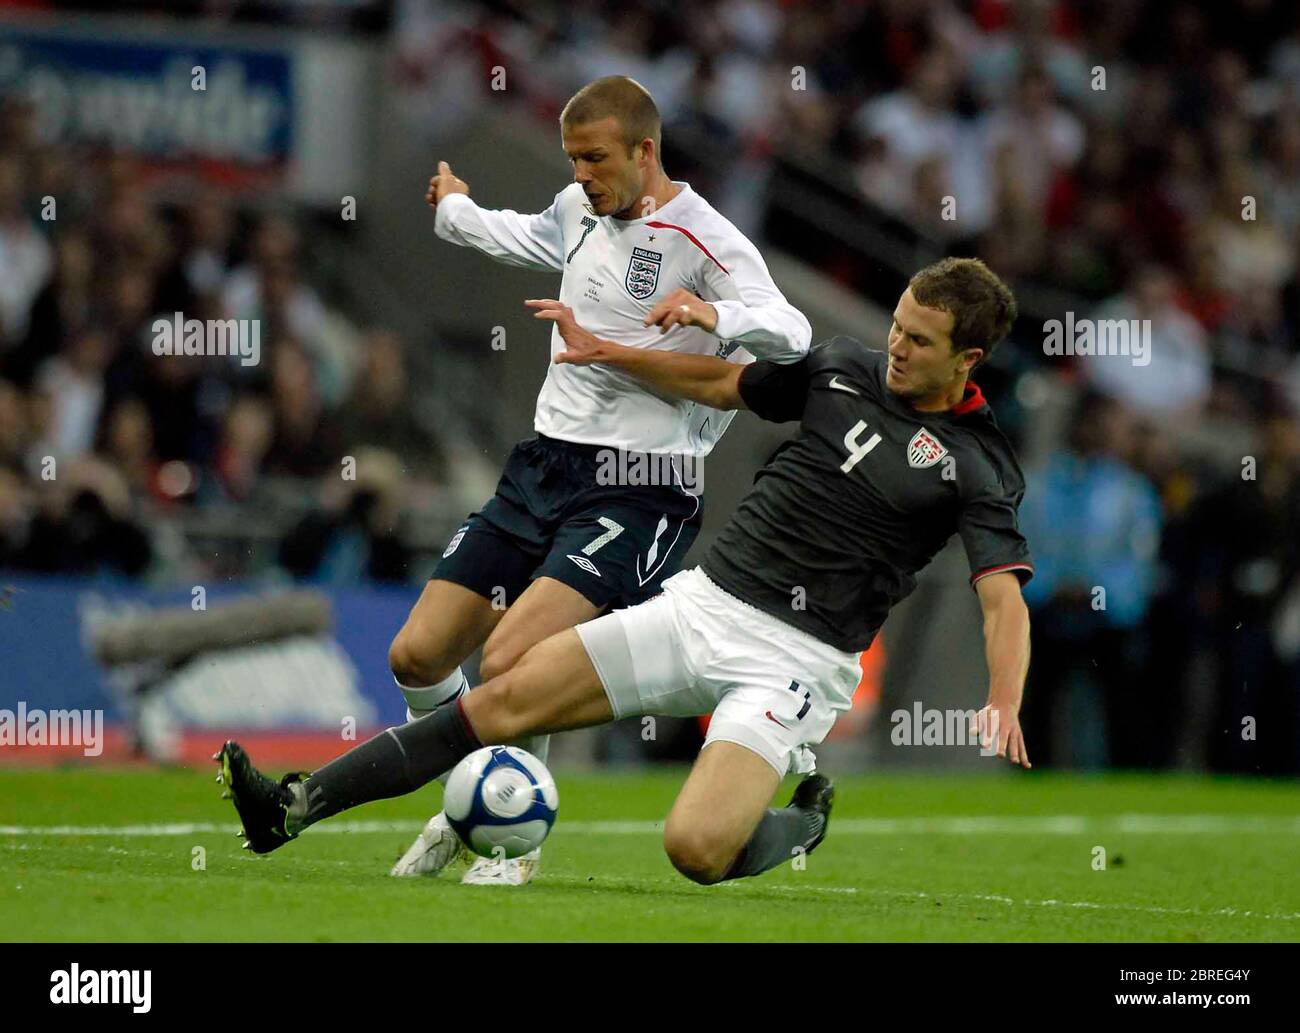 LONDON, UK. MAY 28: David Beckham (England) tries to get past Michael Bradley (USA, 4). during International Friendly between England and USA at Wembl Stock Photo